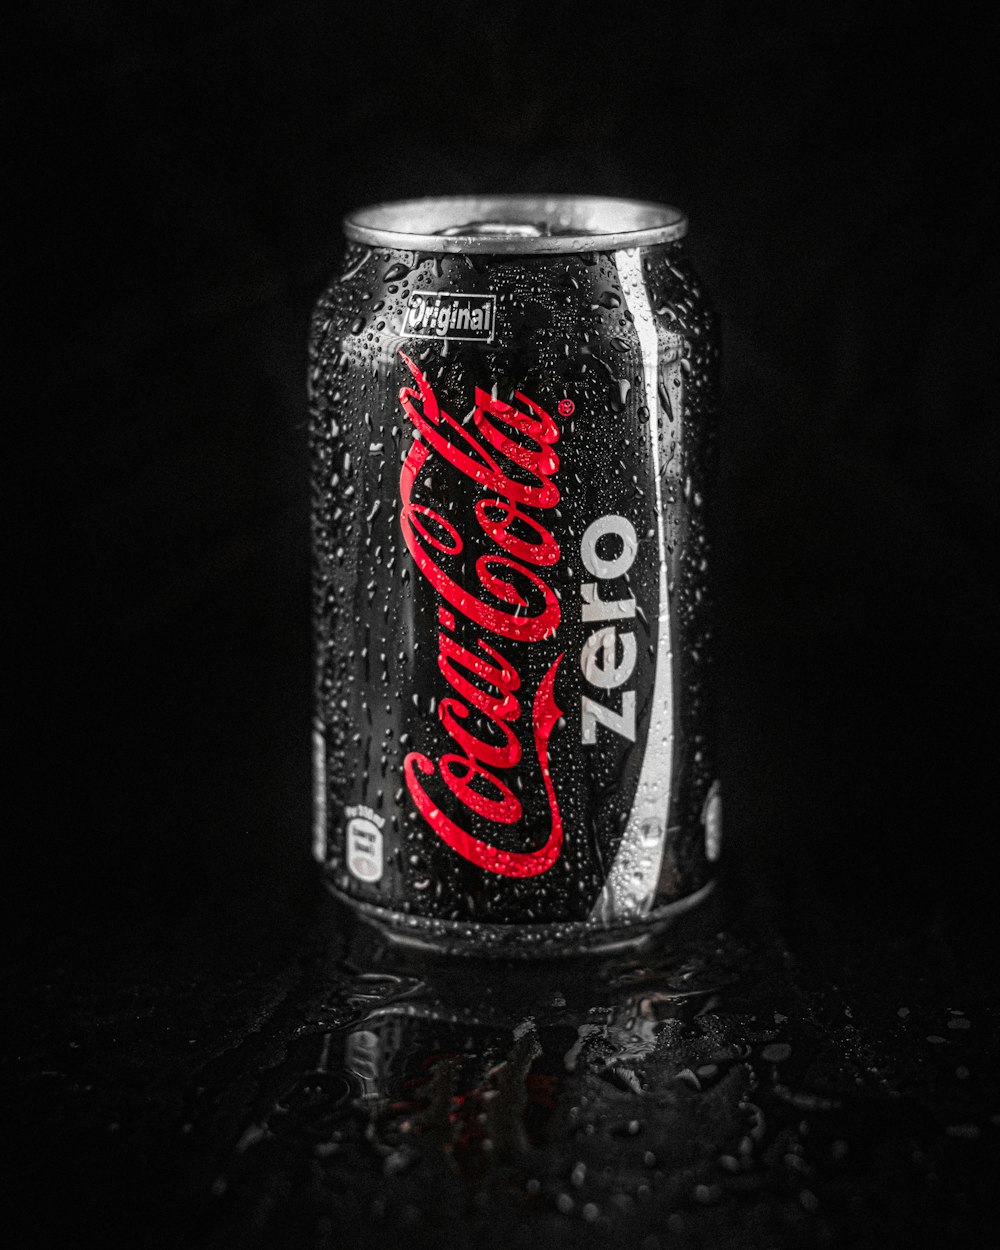 coca cola zero can on black surface